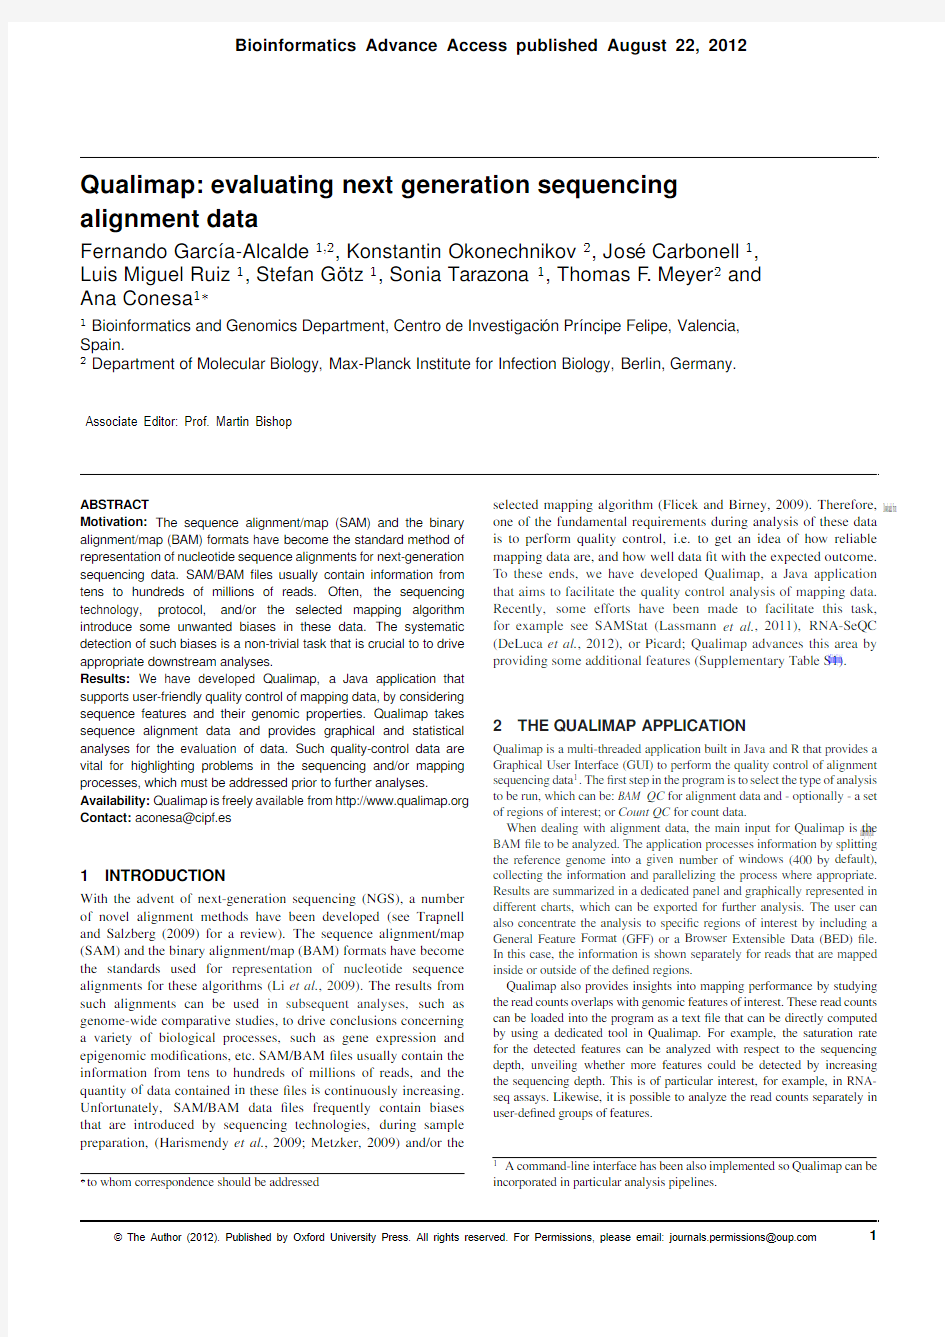 Qualimap - evaluating next generation sequencing alignment data - Bioinformatics